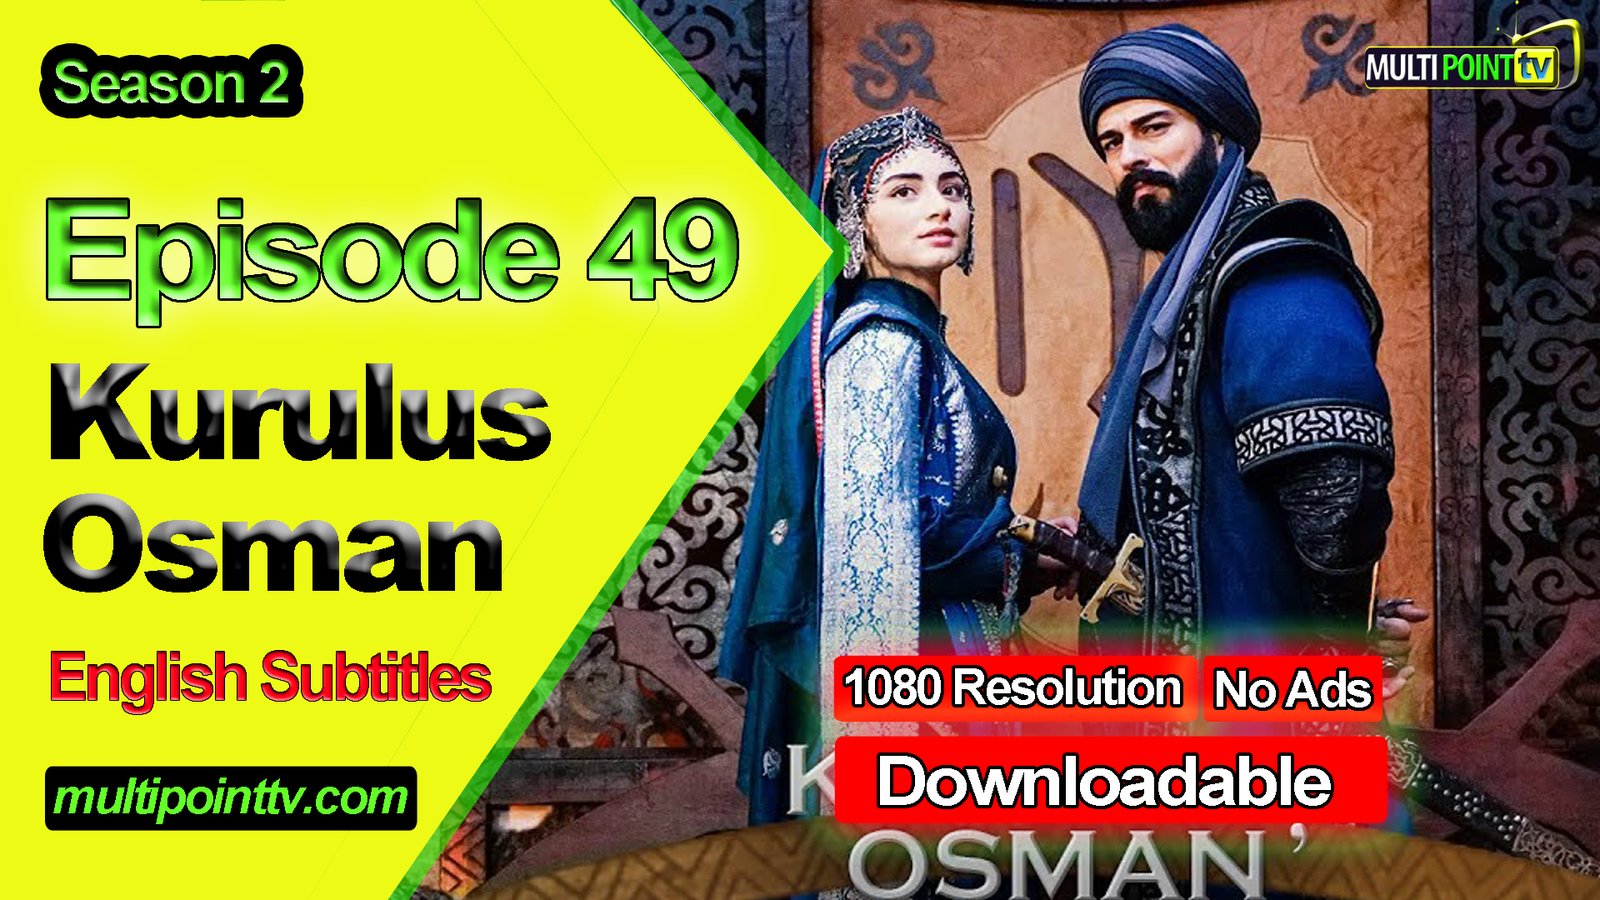 Kurulus Osman Episode 49 English Subtitles